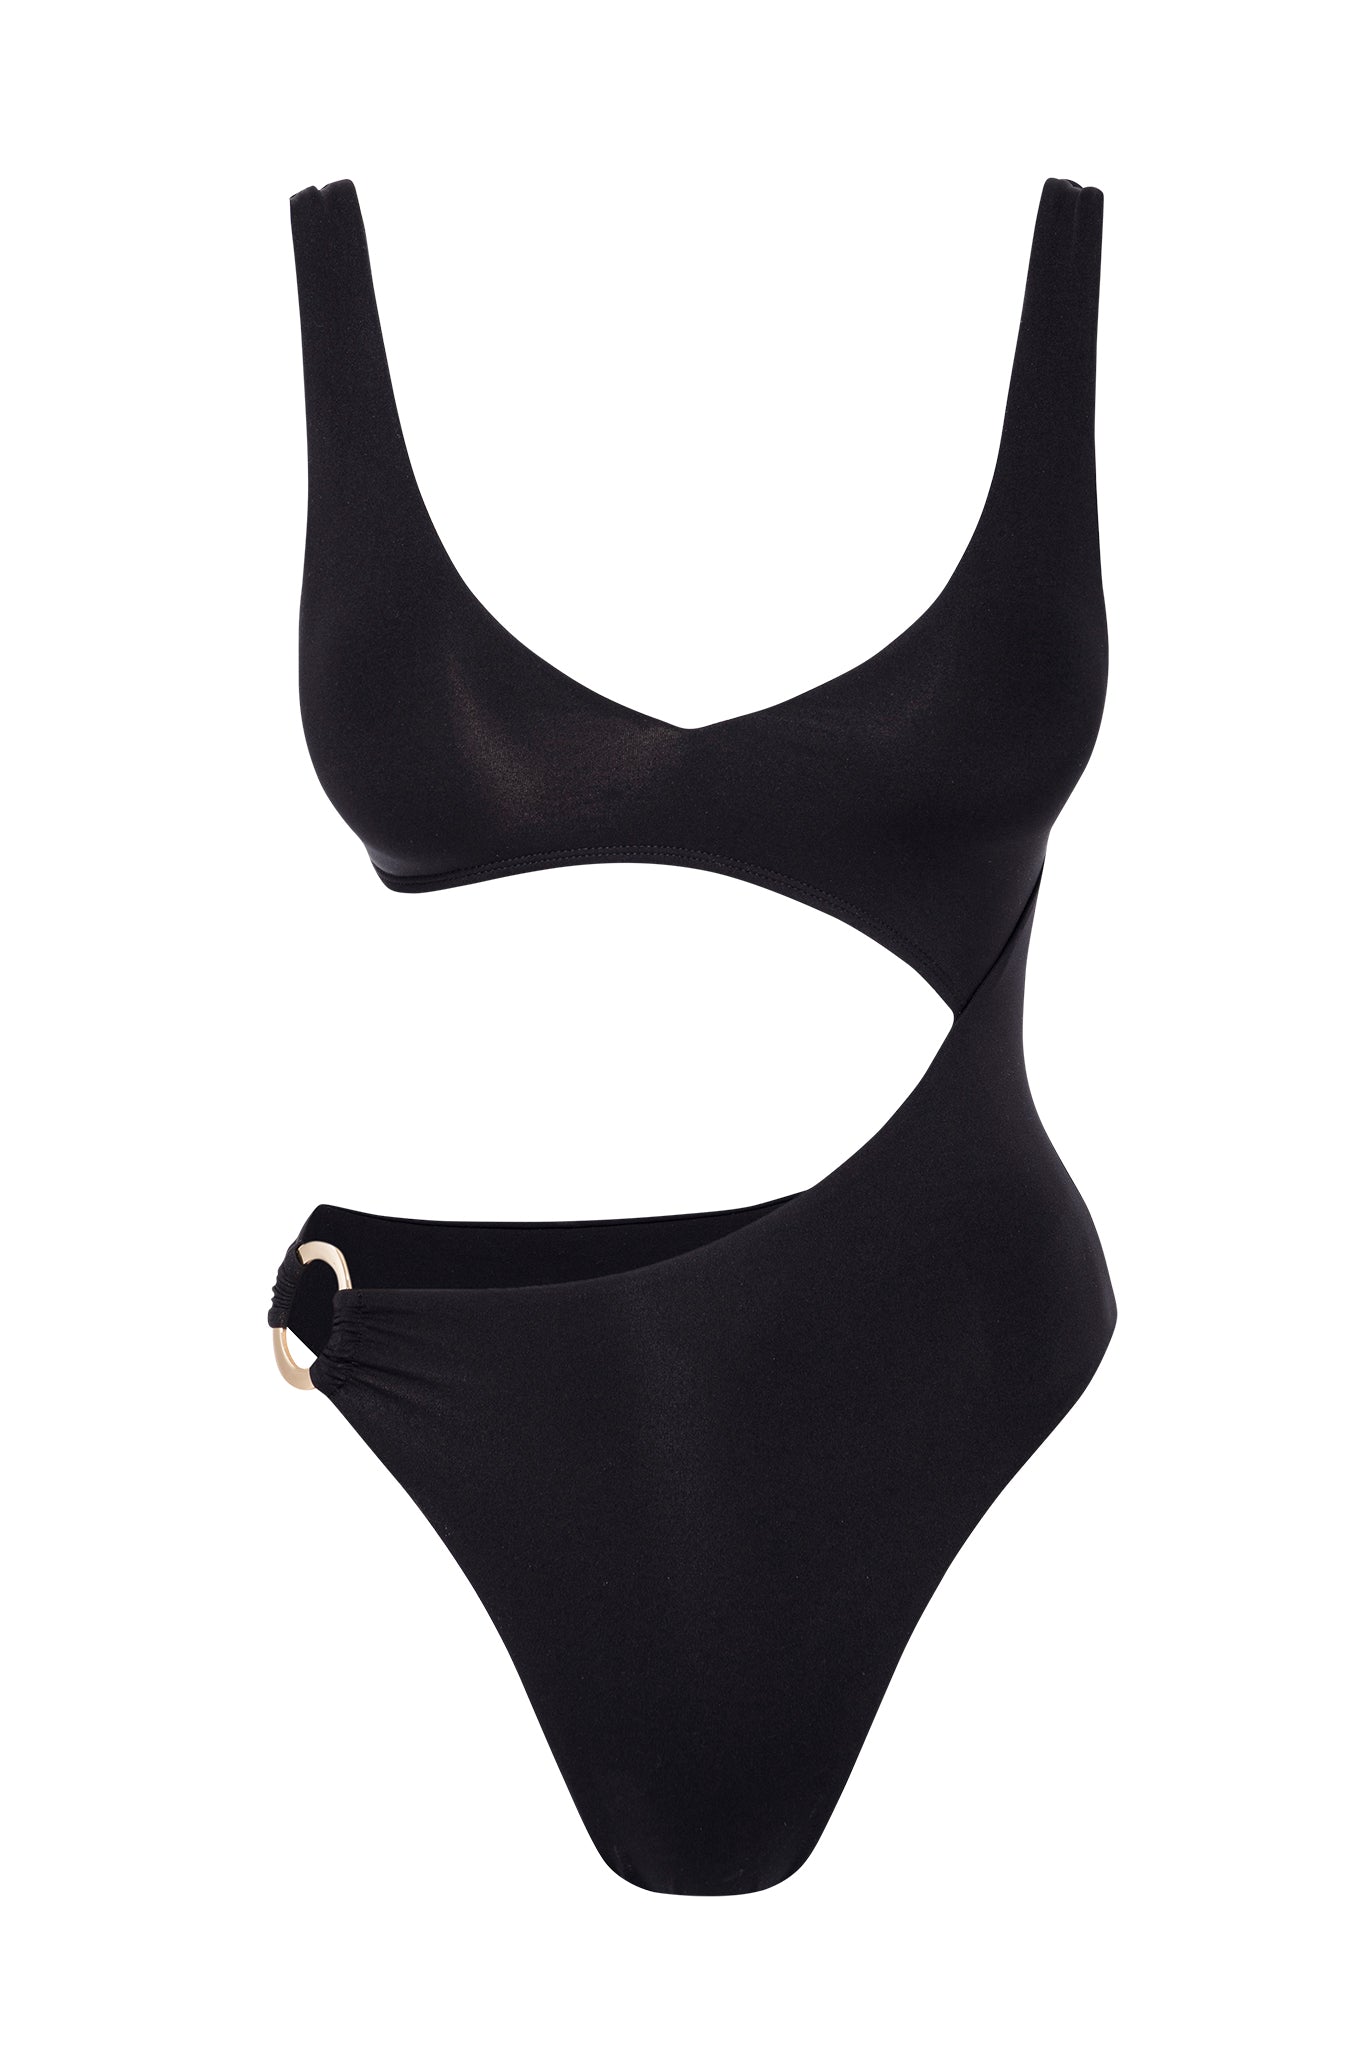 Monday Swimwear Santa Caterina One Piece - Black Black / L